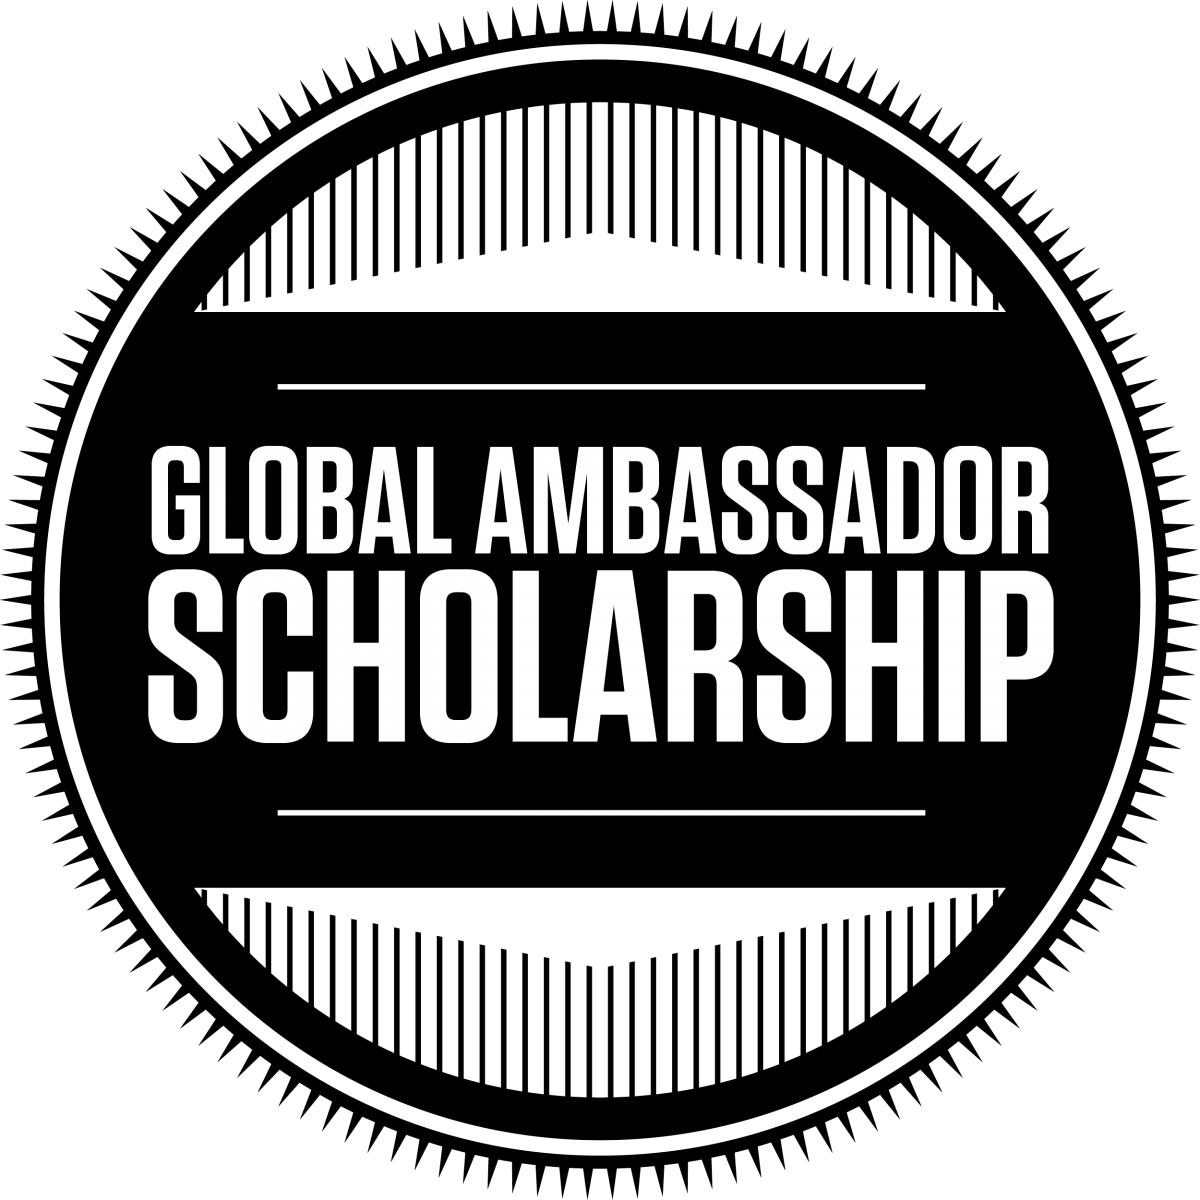 Global Ambassador Scholarship logo